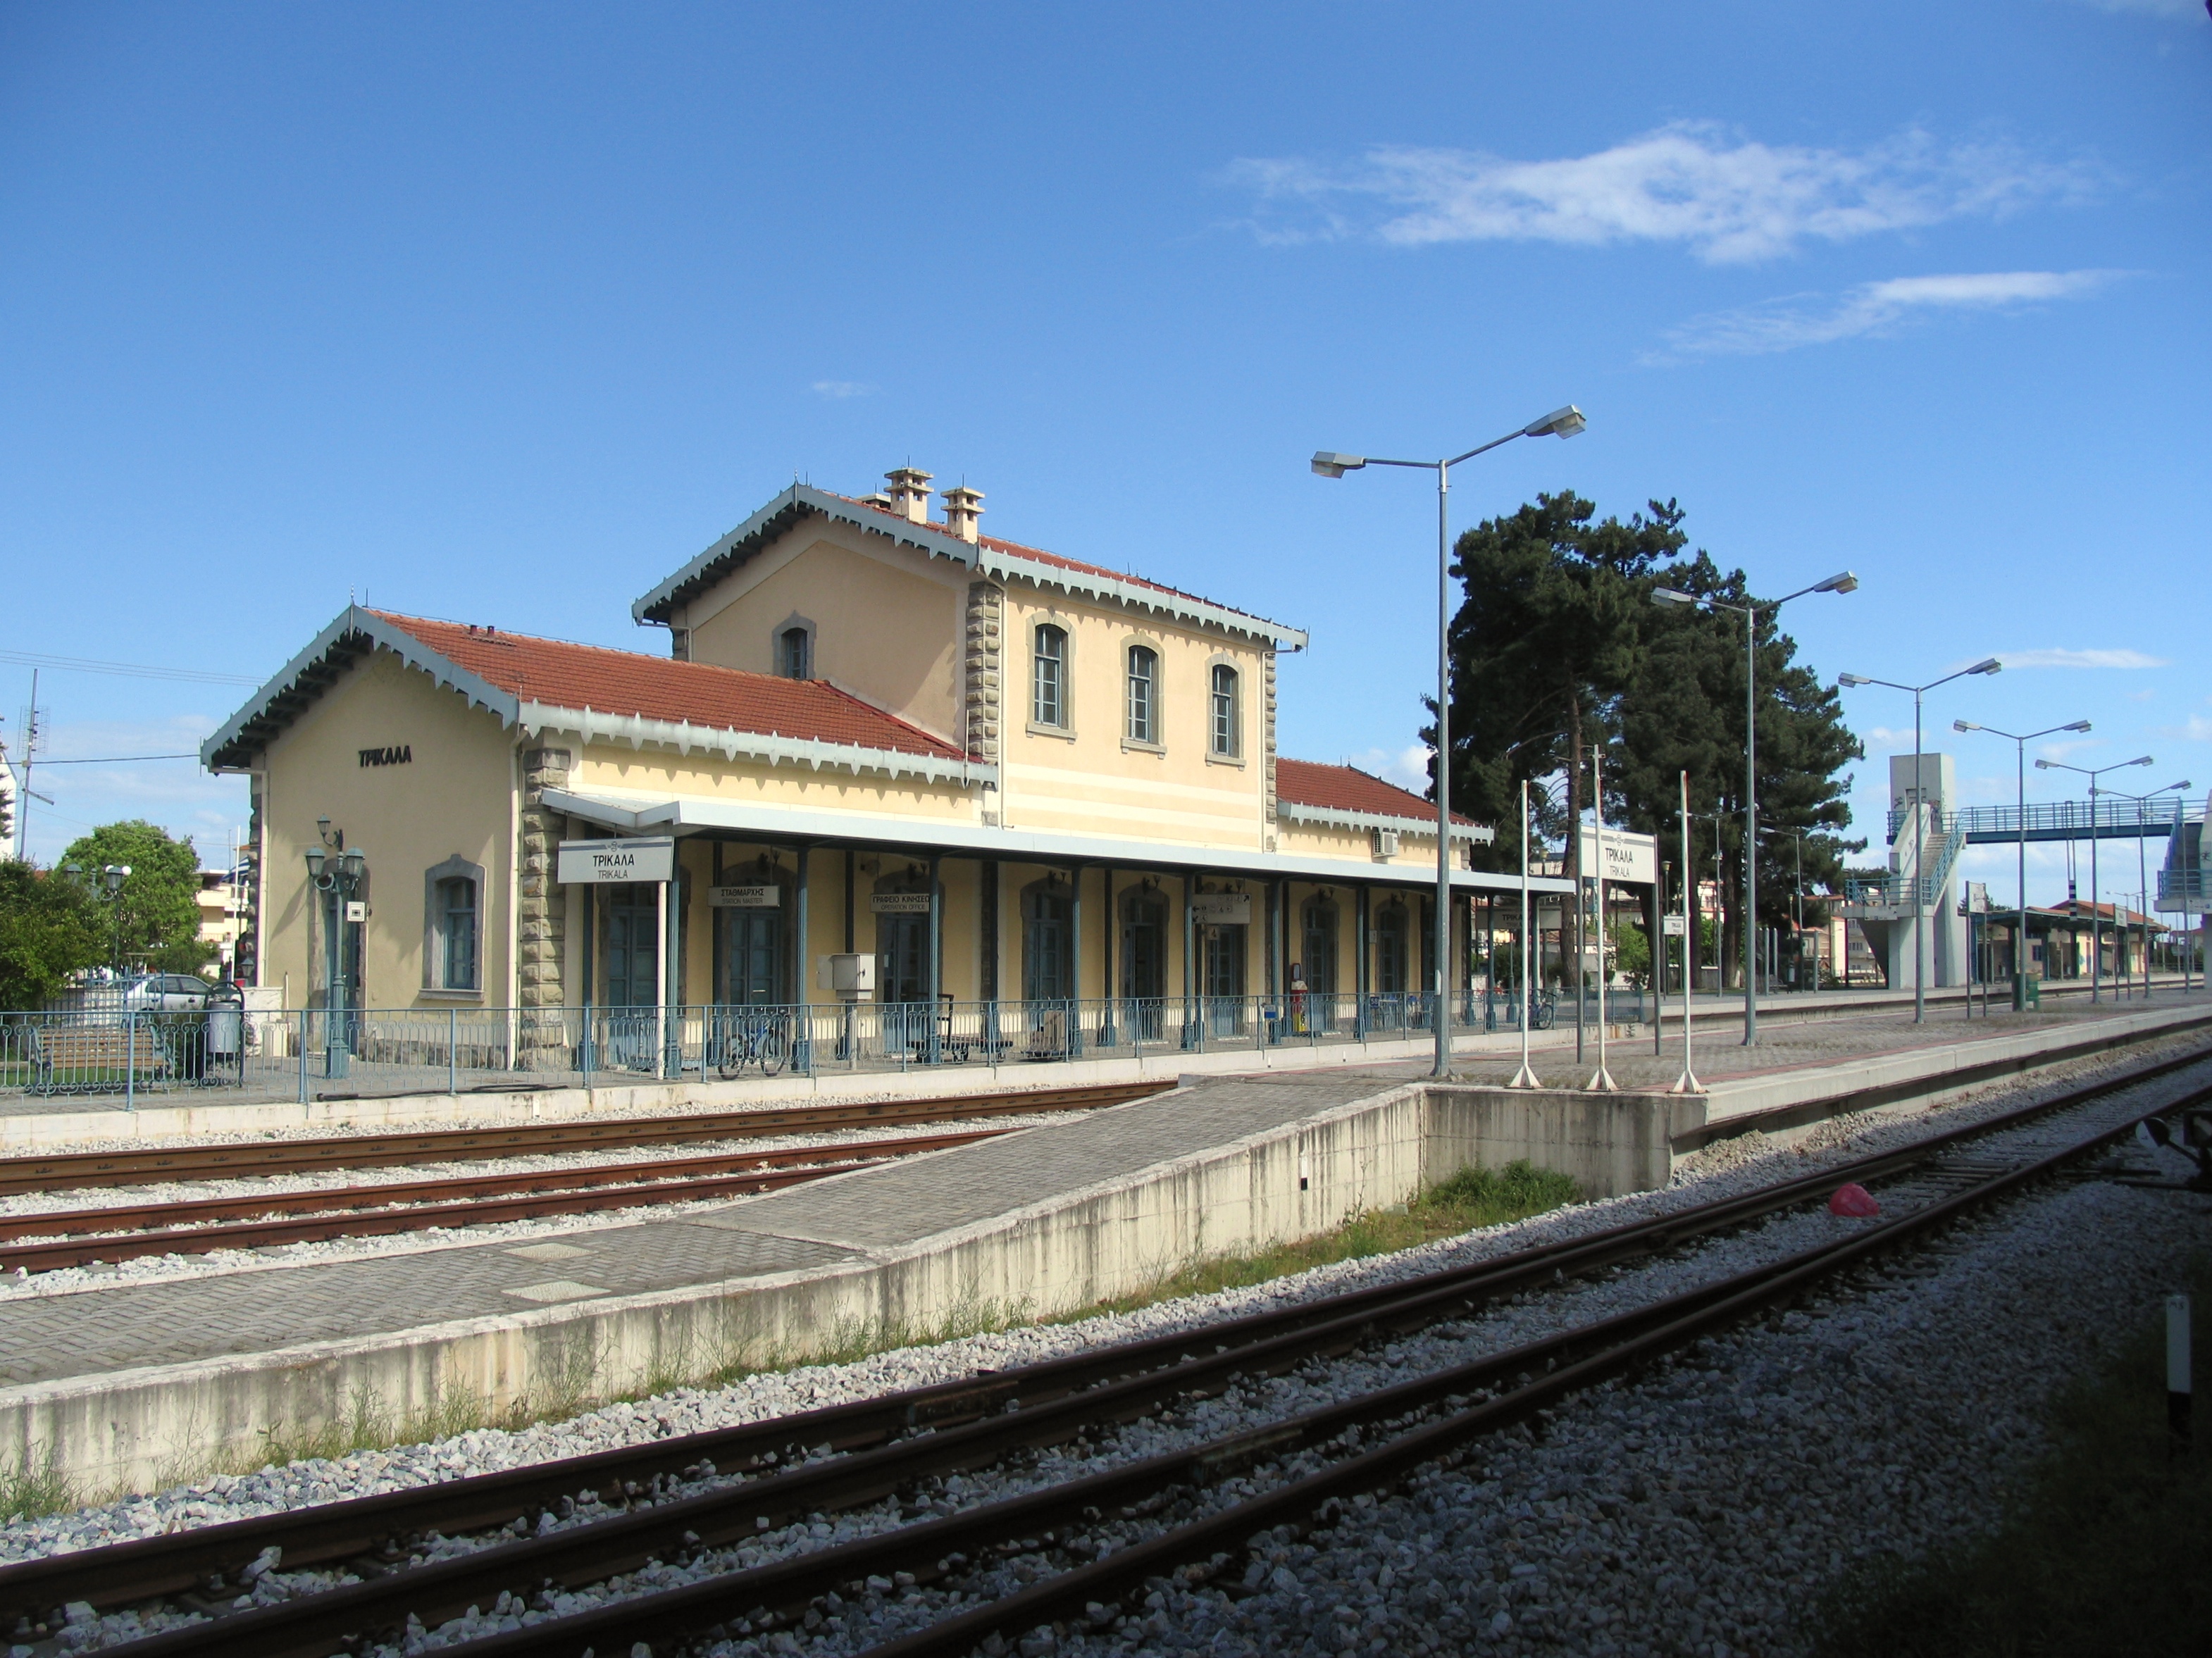 File:The old train station of Trikala.jpg - Wikimedia Commons